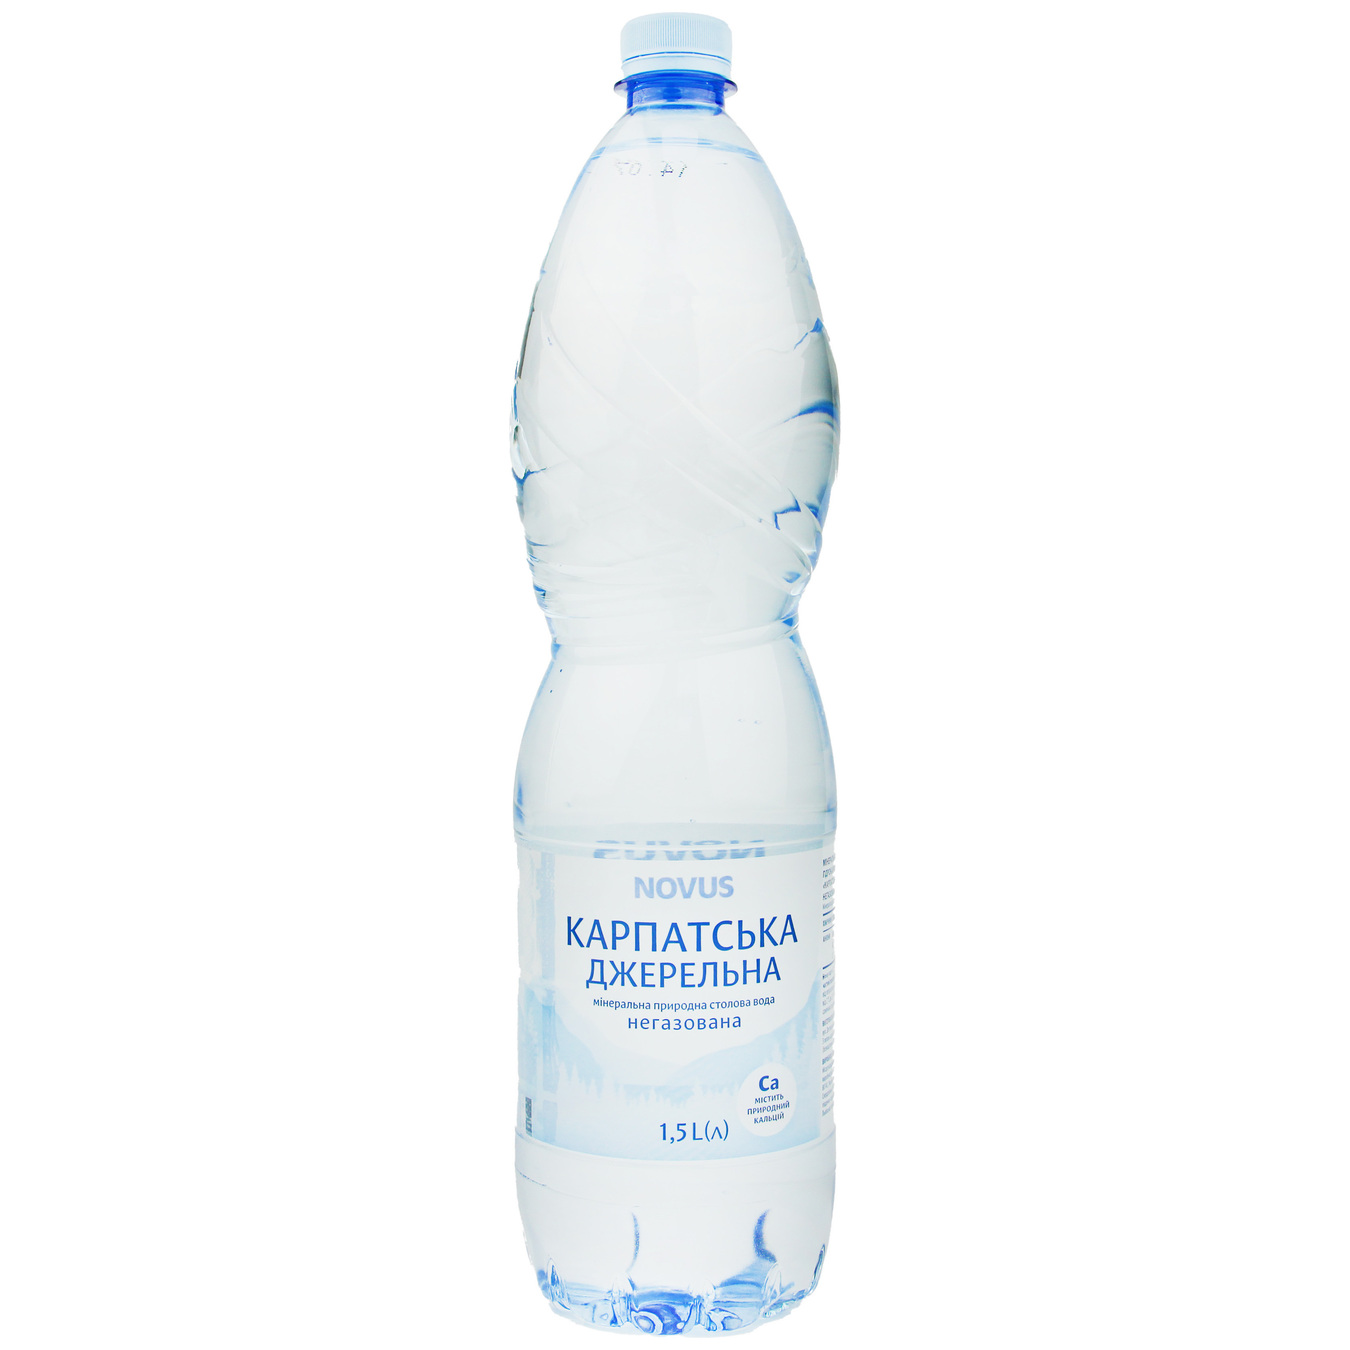 Novus Karpatska Dzherelna Non-Carbonated Water 1,5l